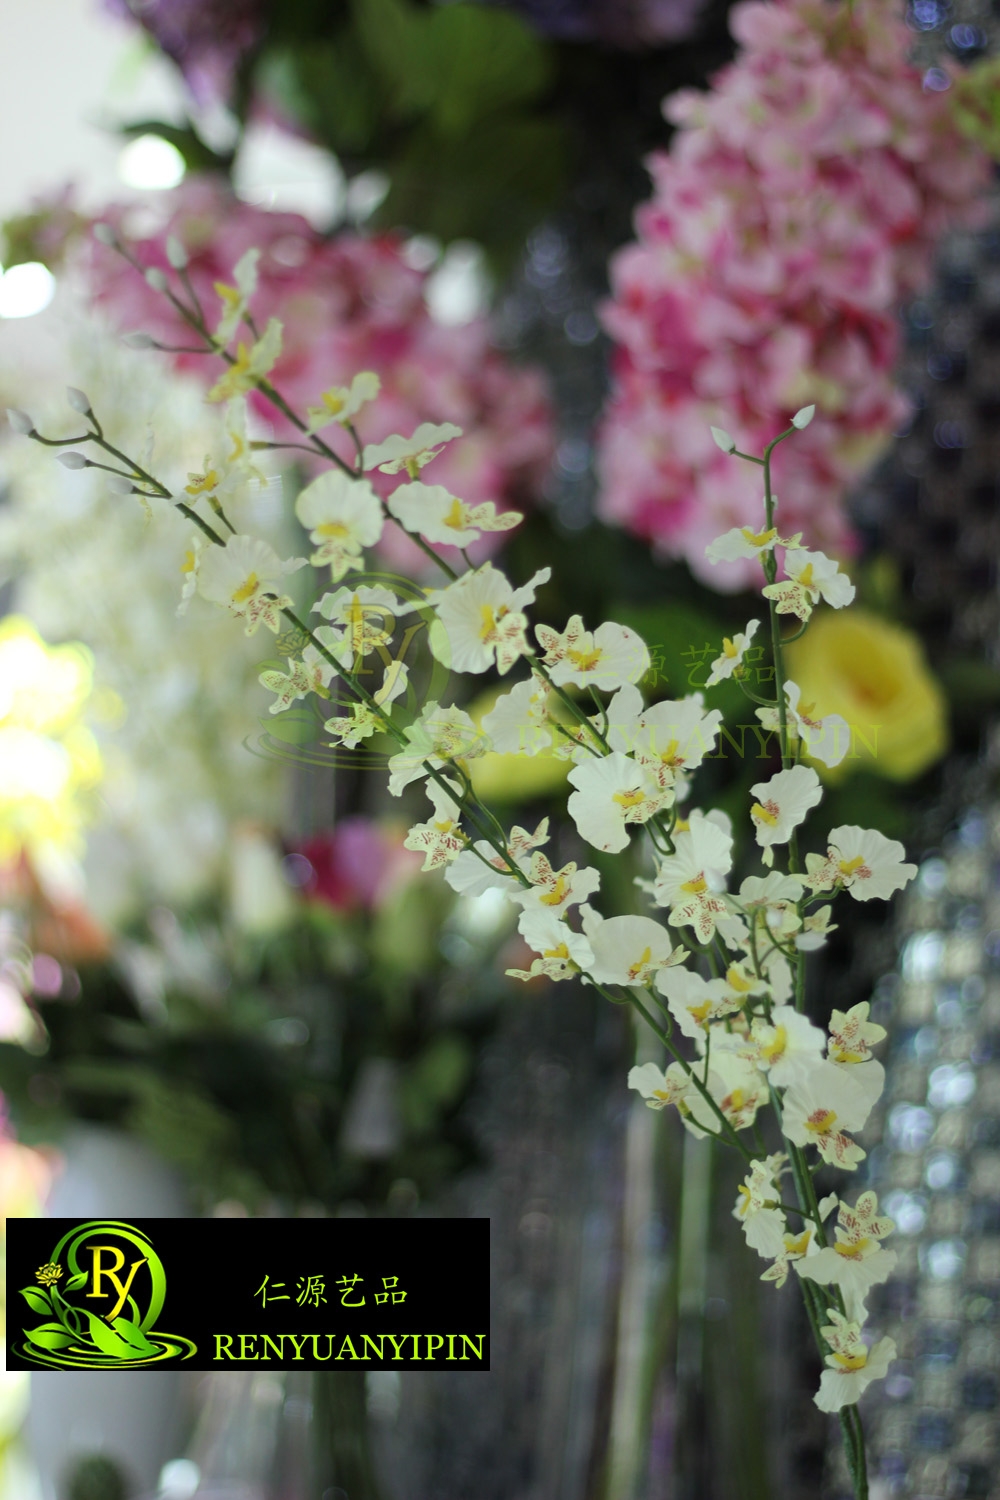 Field dance orchid simulation flower simulation plant home decoration2